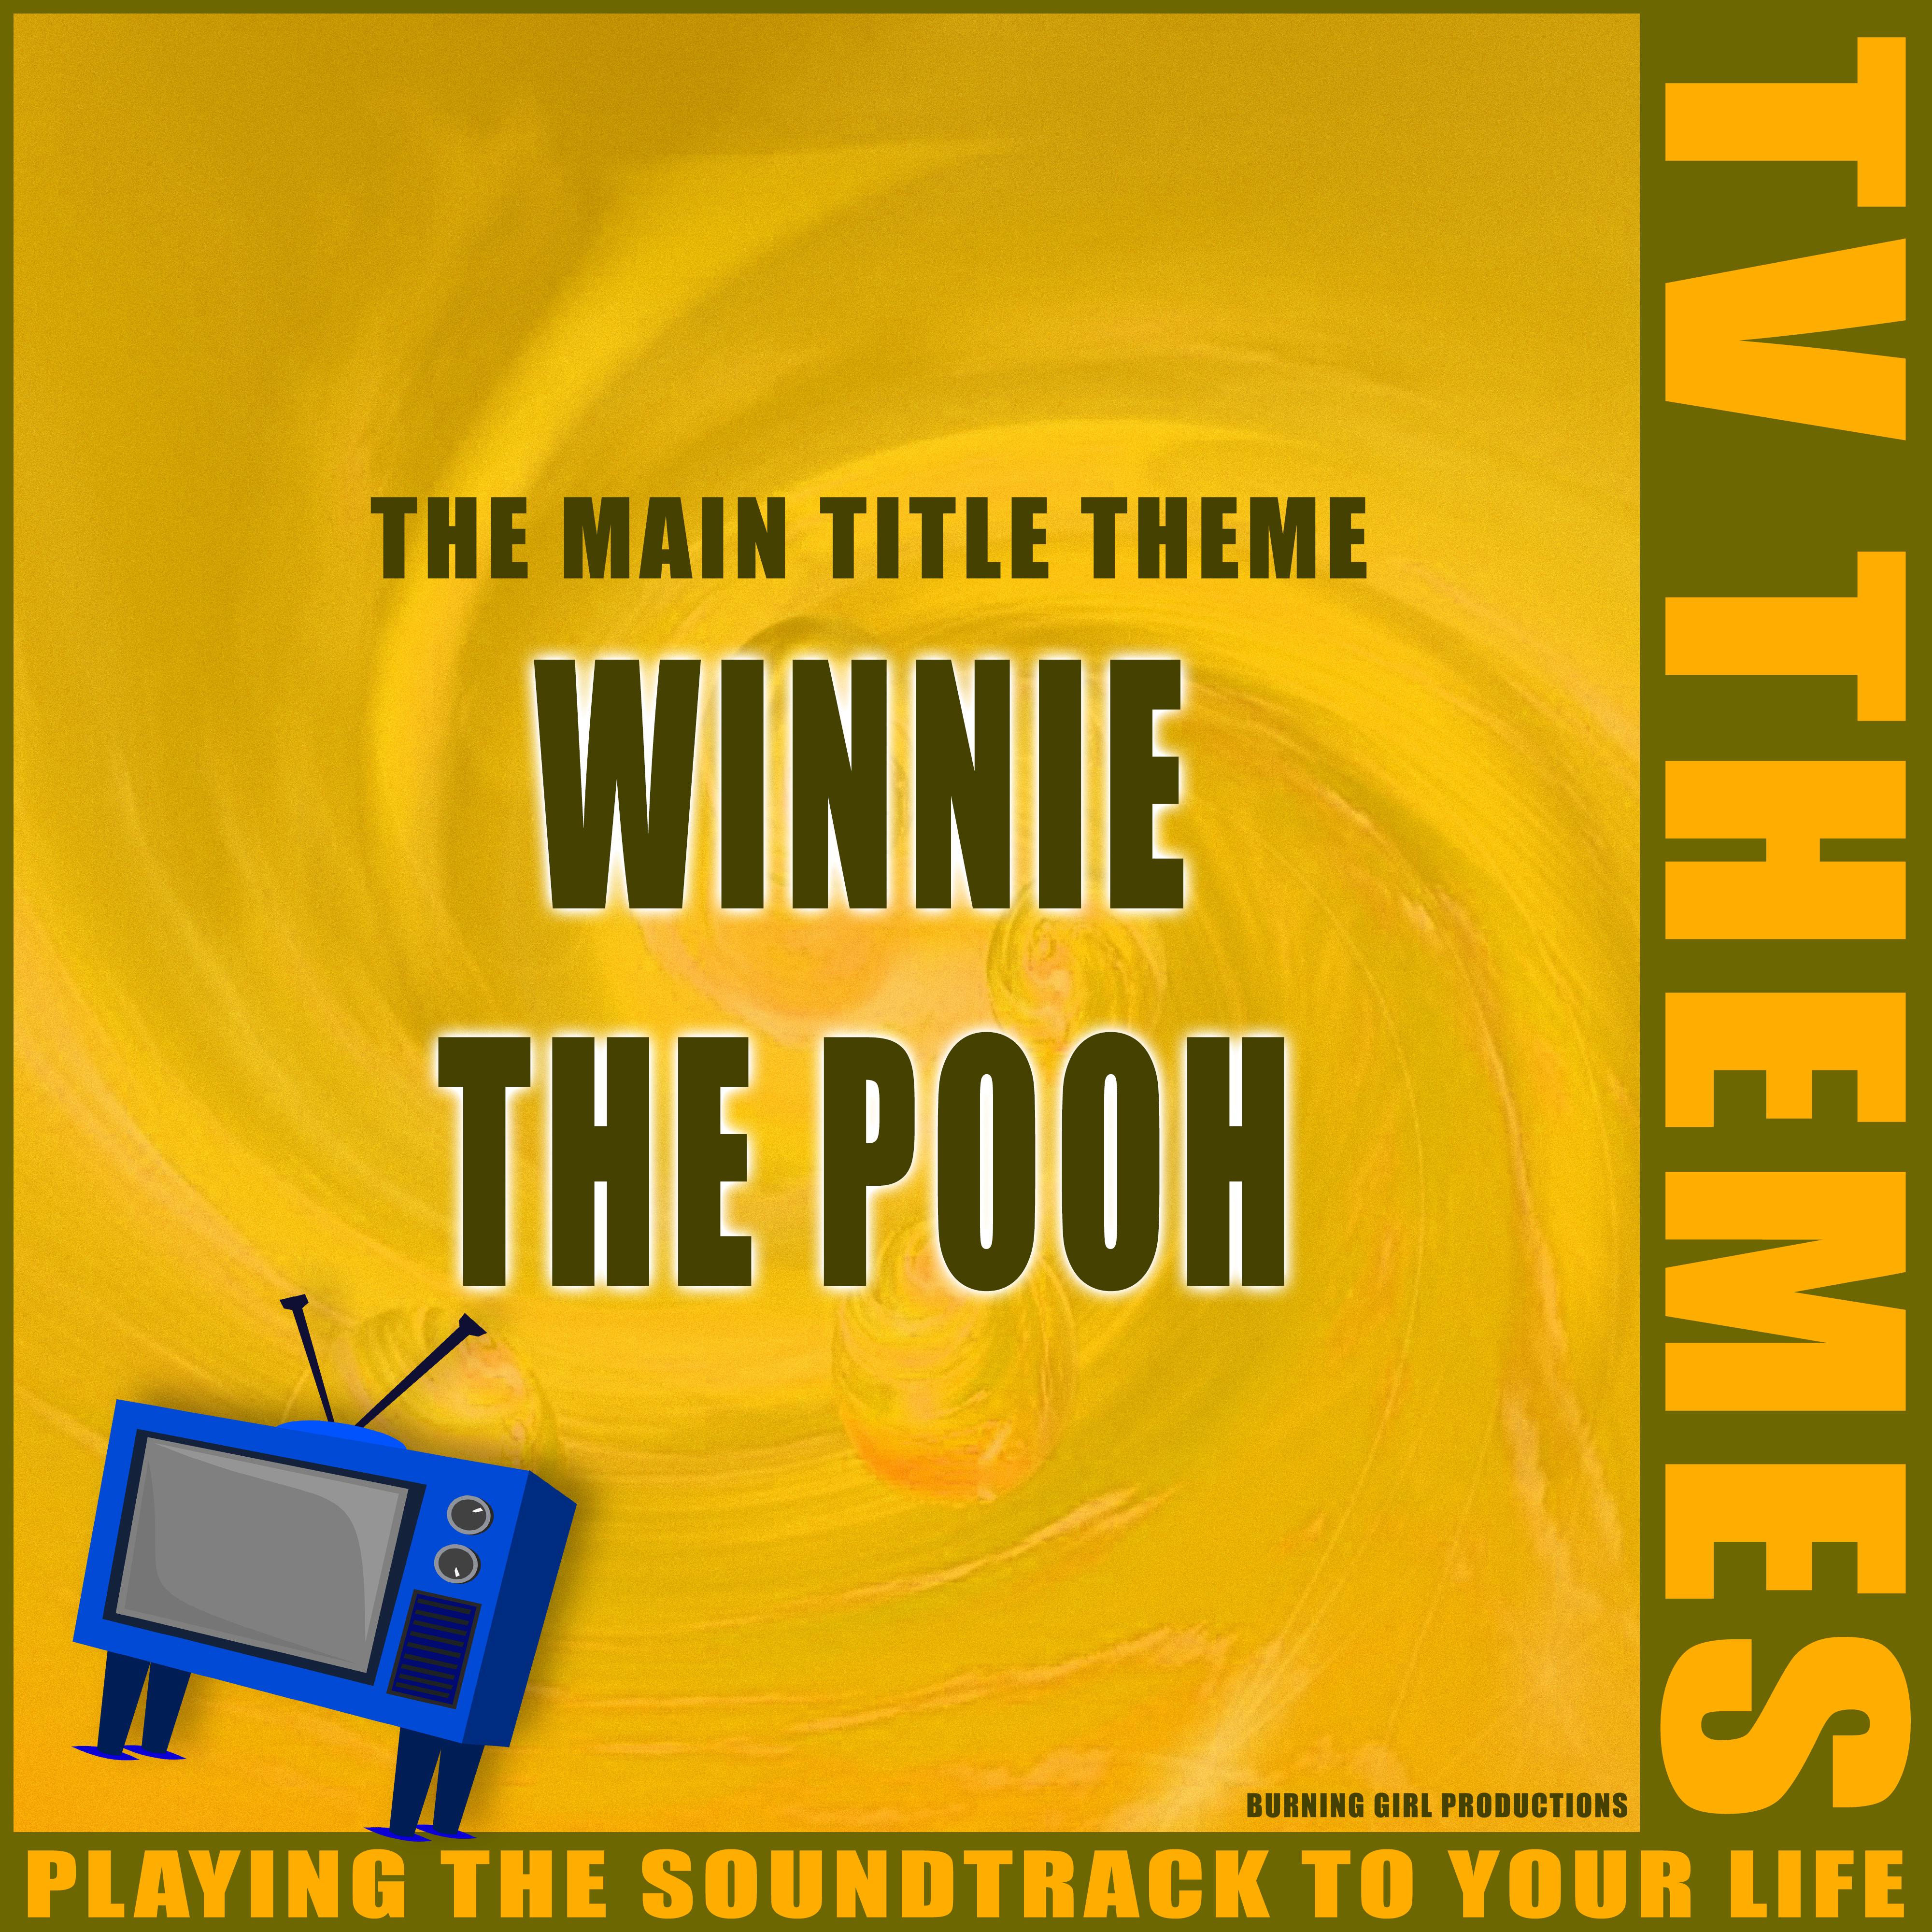 Winnie the Pooh - The Main Title Theme